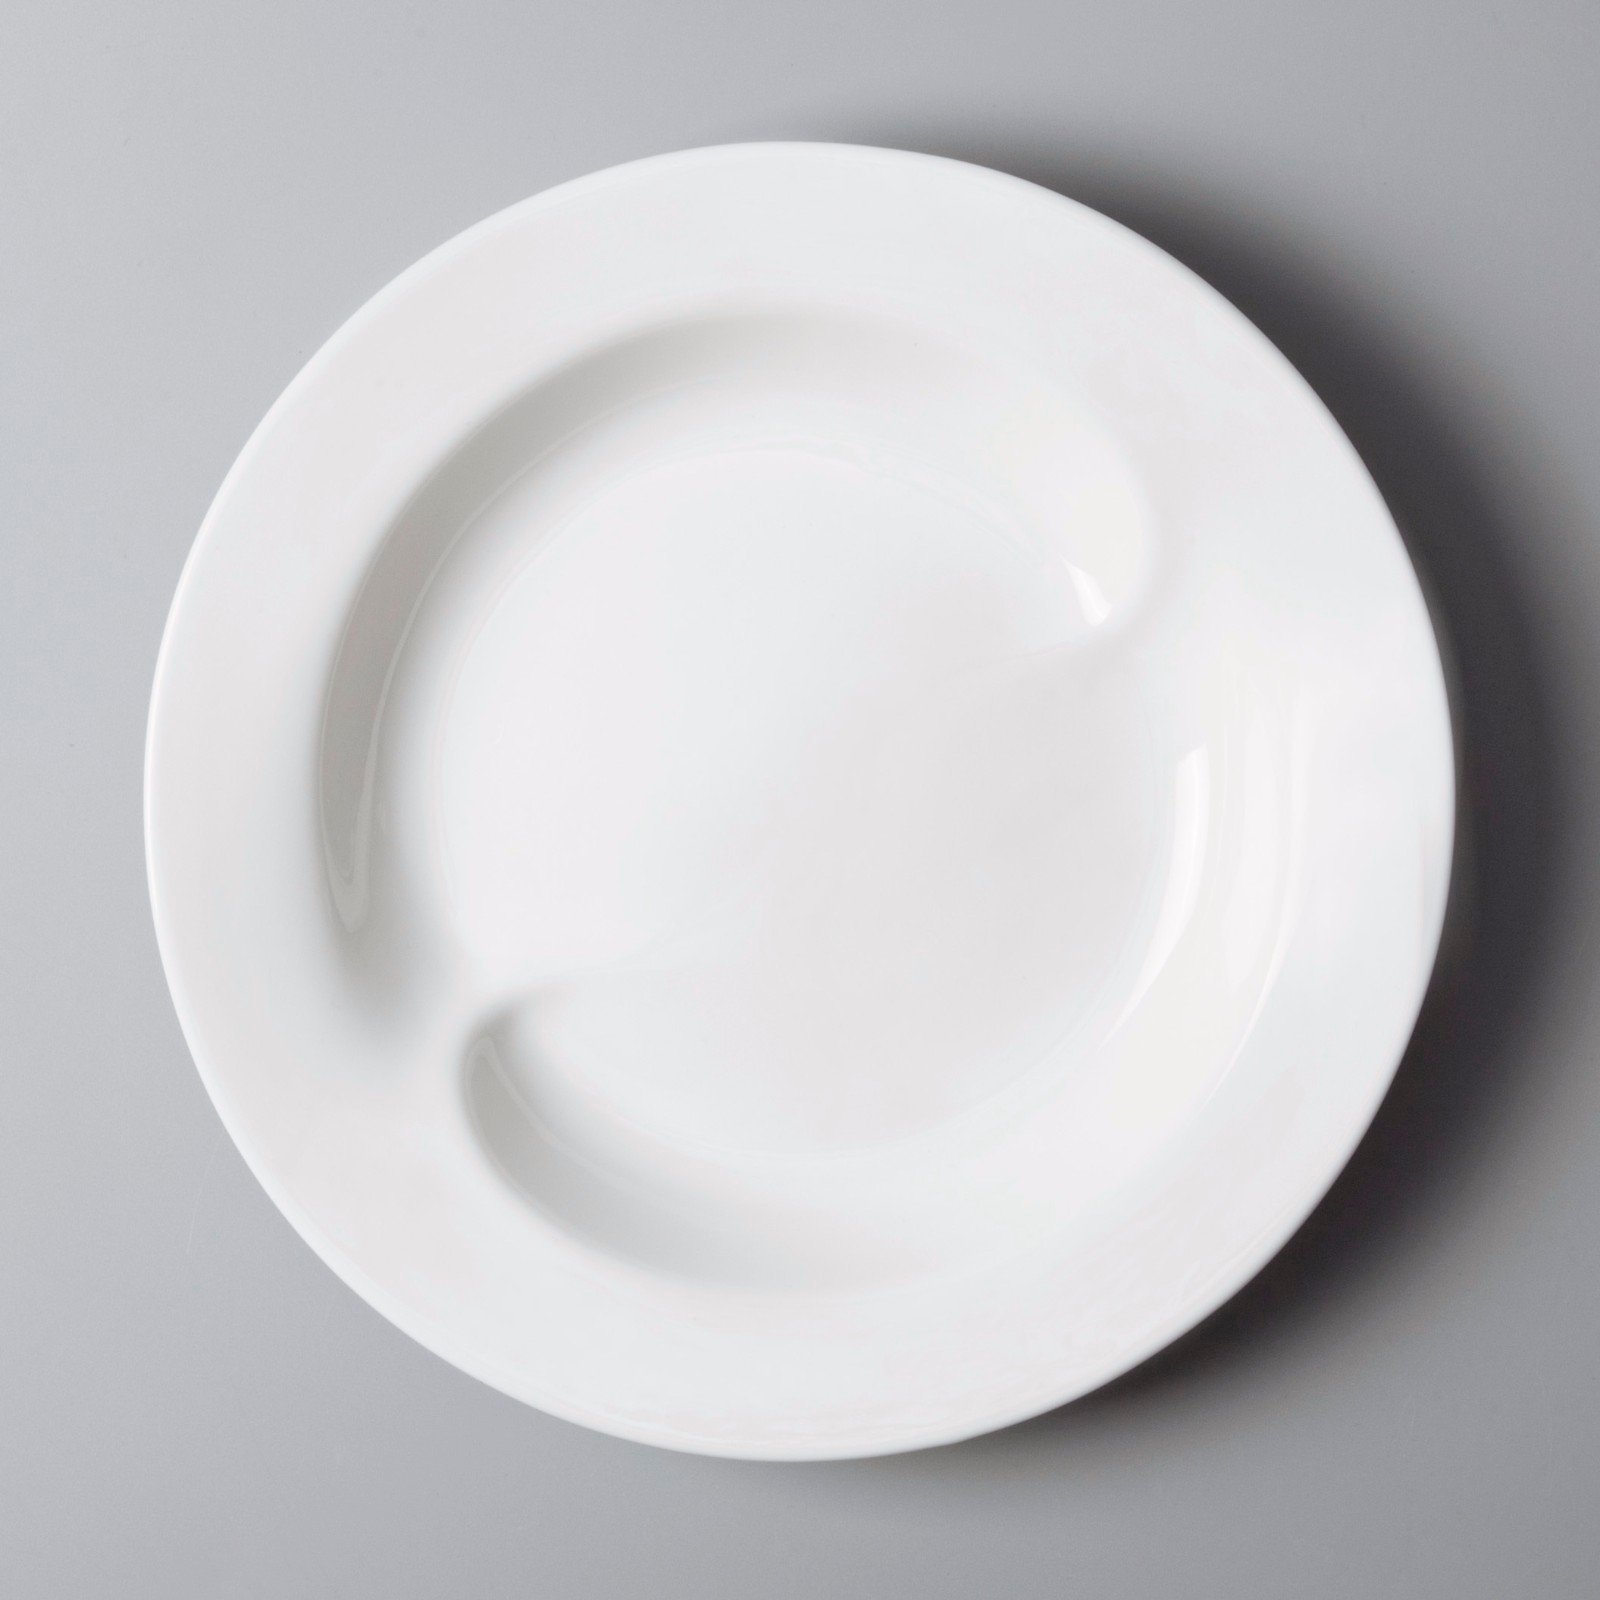 glaze best porcelain dinnerware in the world Italian style manufacturerfor home